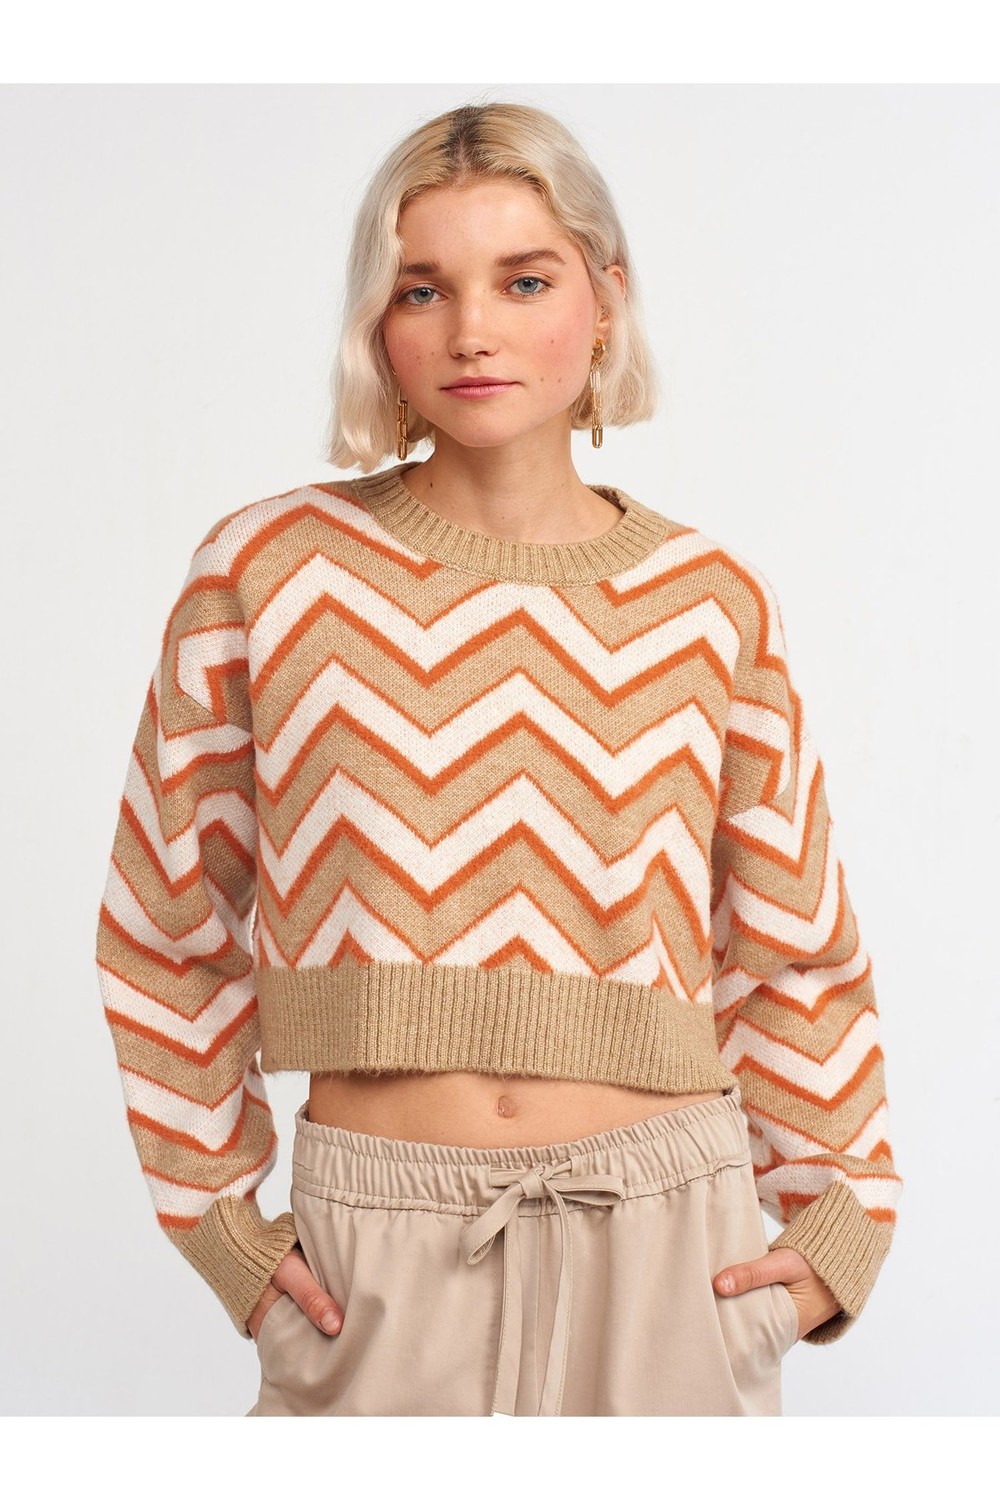 Dilvin 10253 Large Collar Patterned Sweater-Y.orange